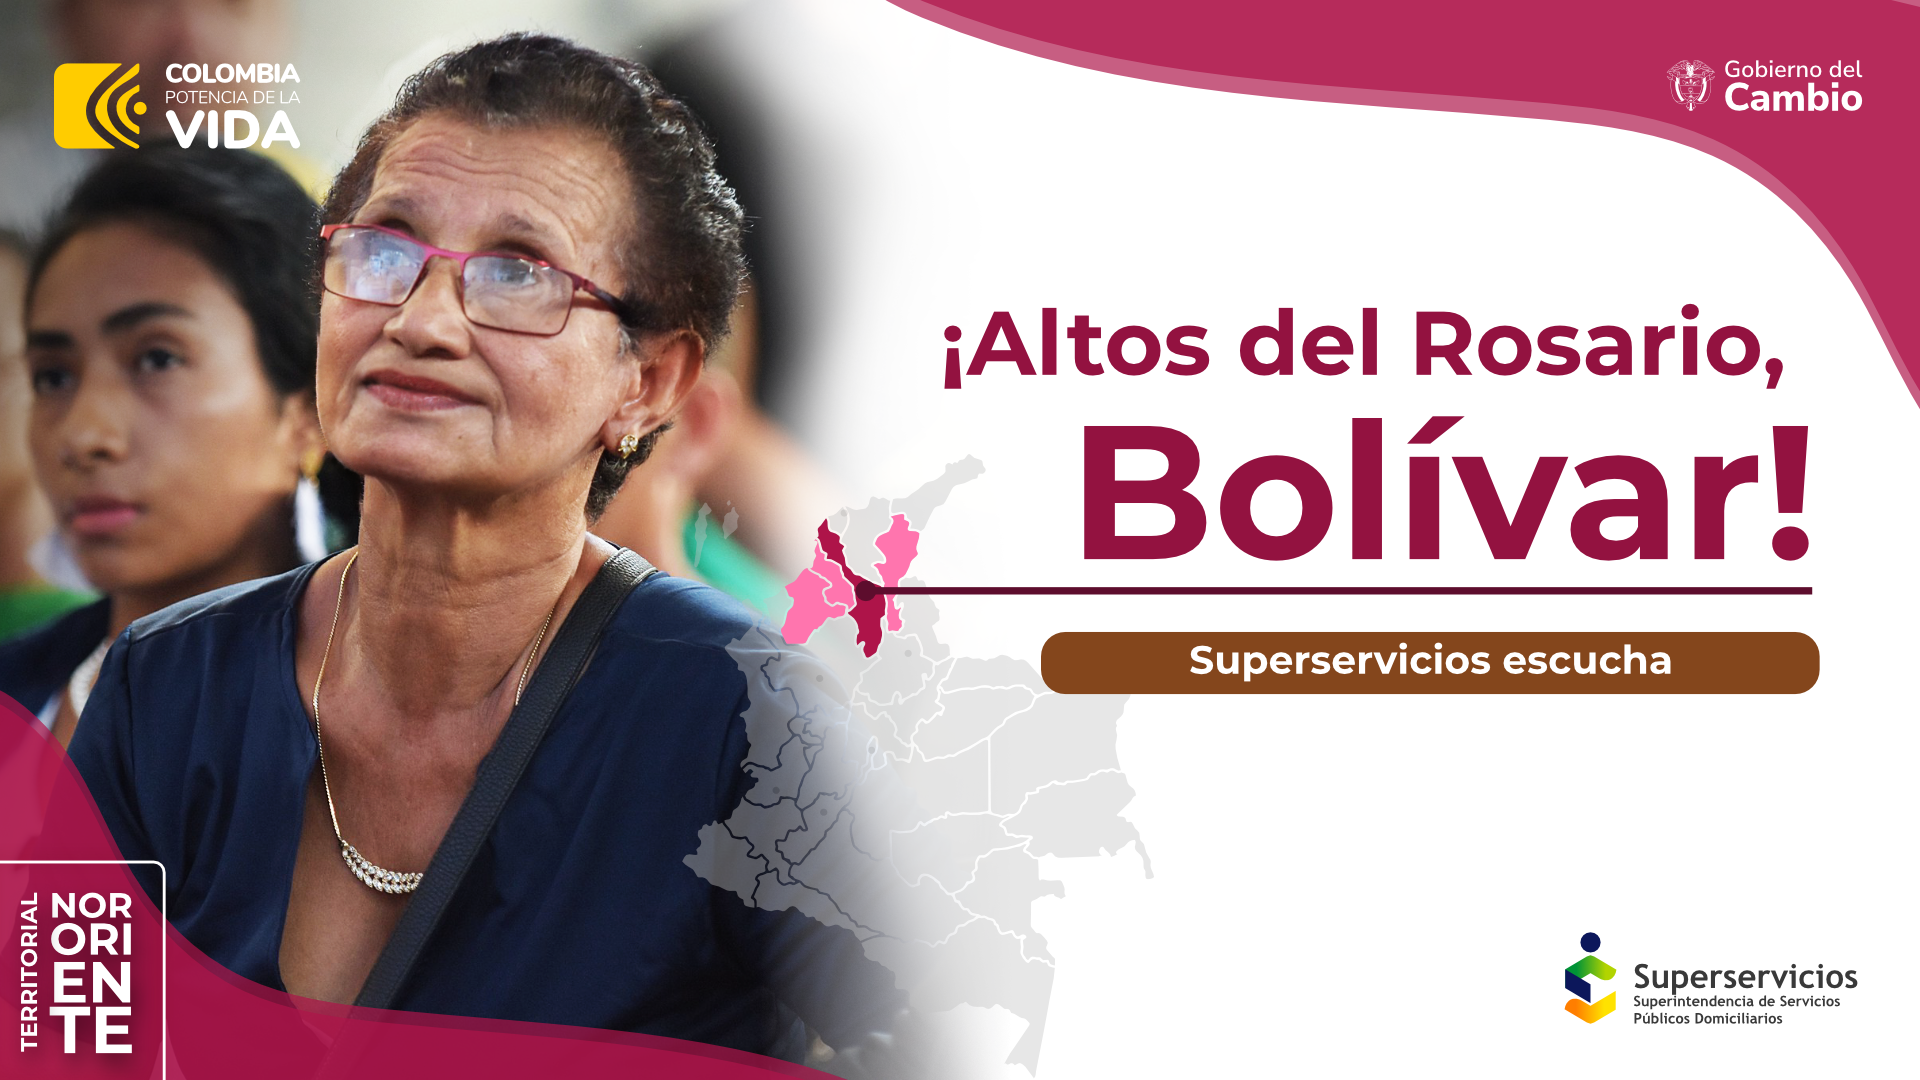 Superservicios escucha en Altos del Rosario, Bolívar
